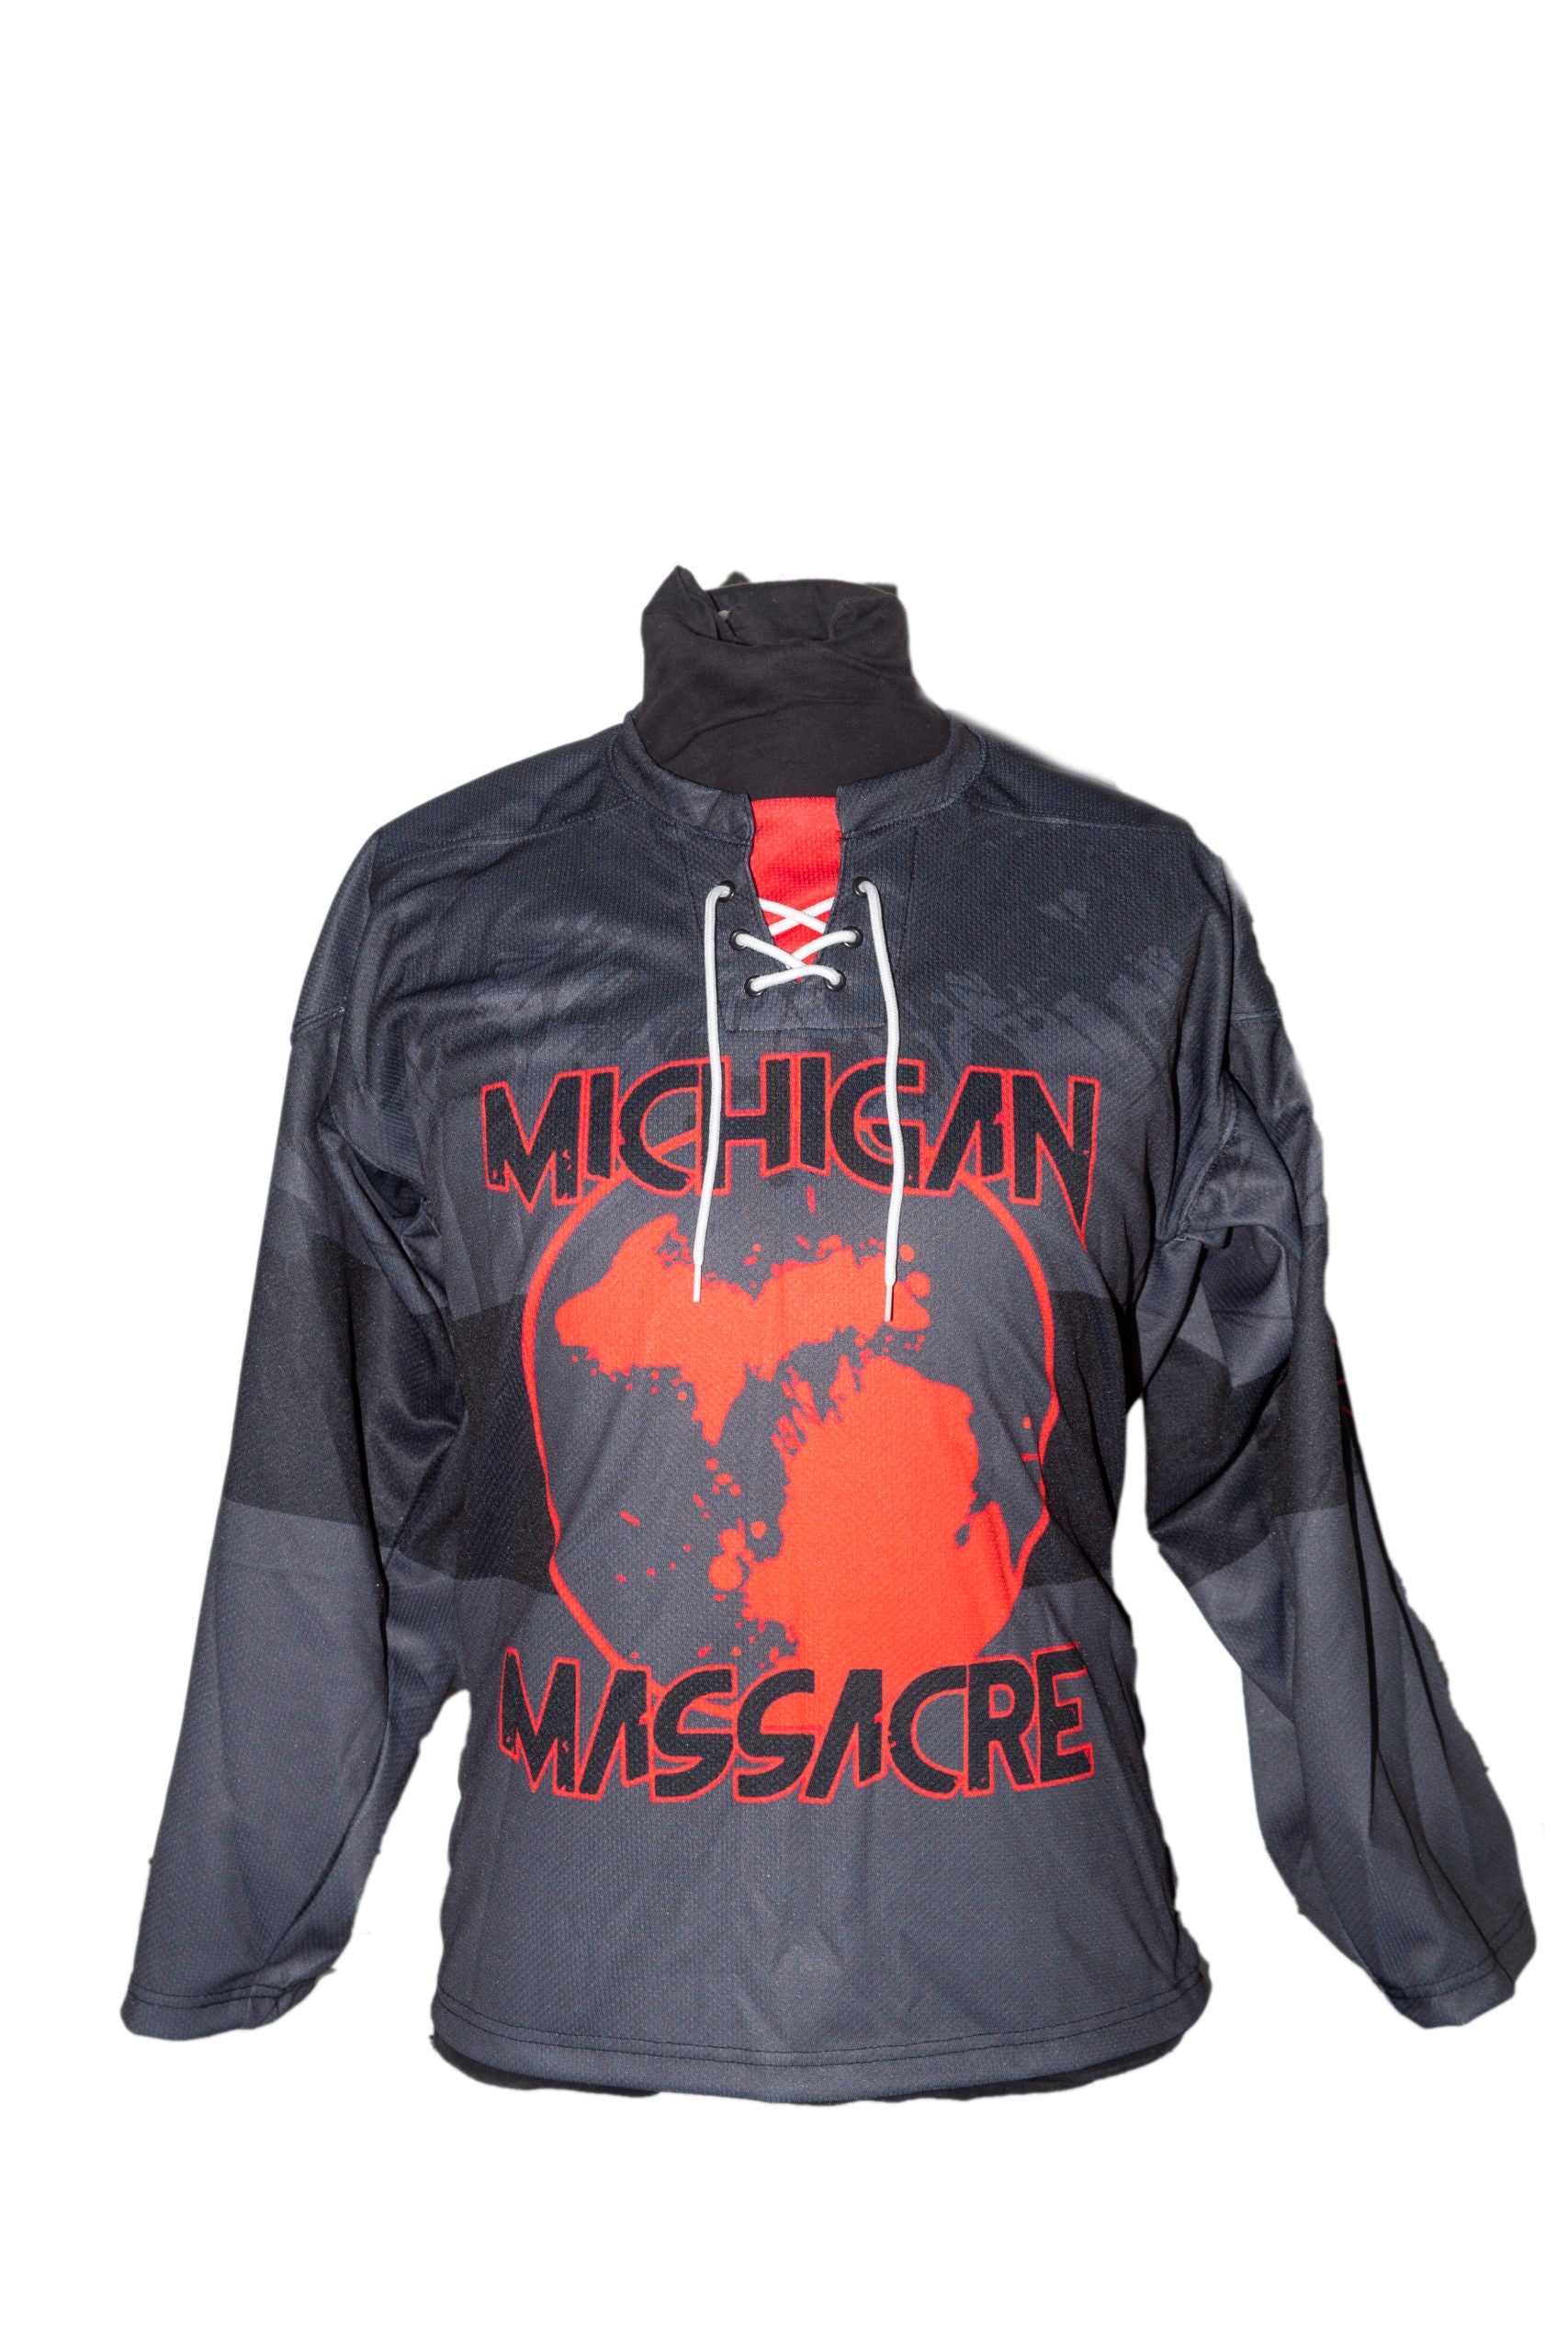 Michigan Massacre - Away Grey Jersey (Owner - Mess Bucket Comics)